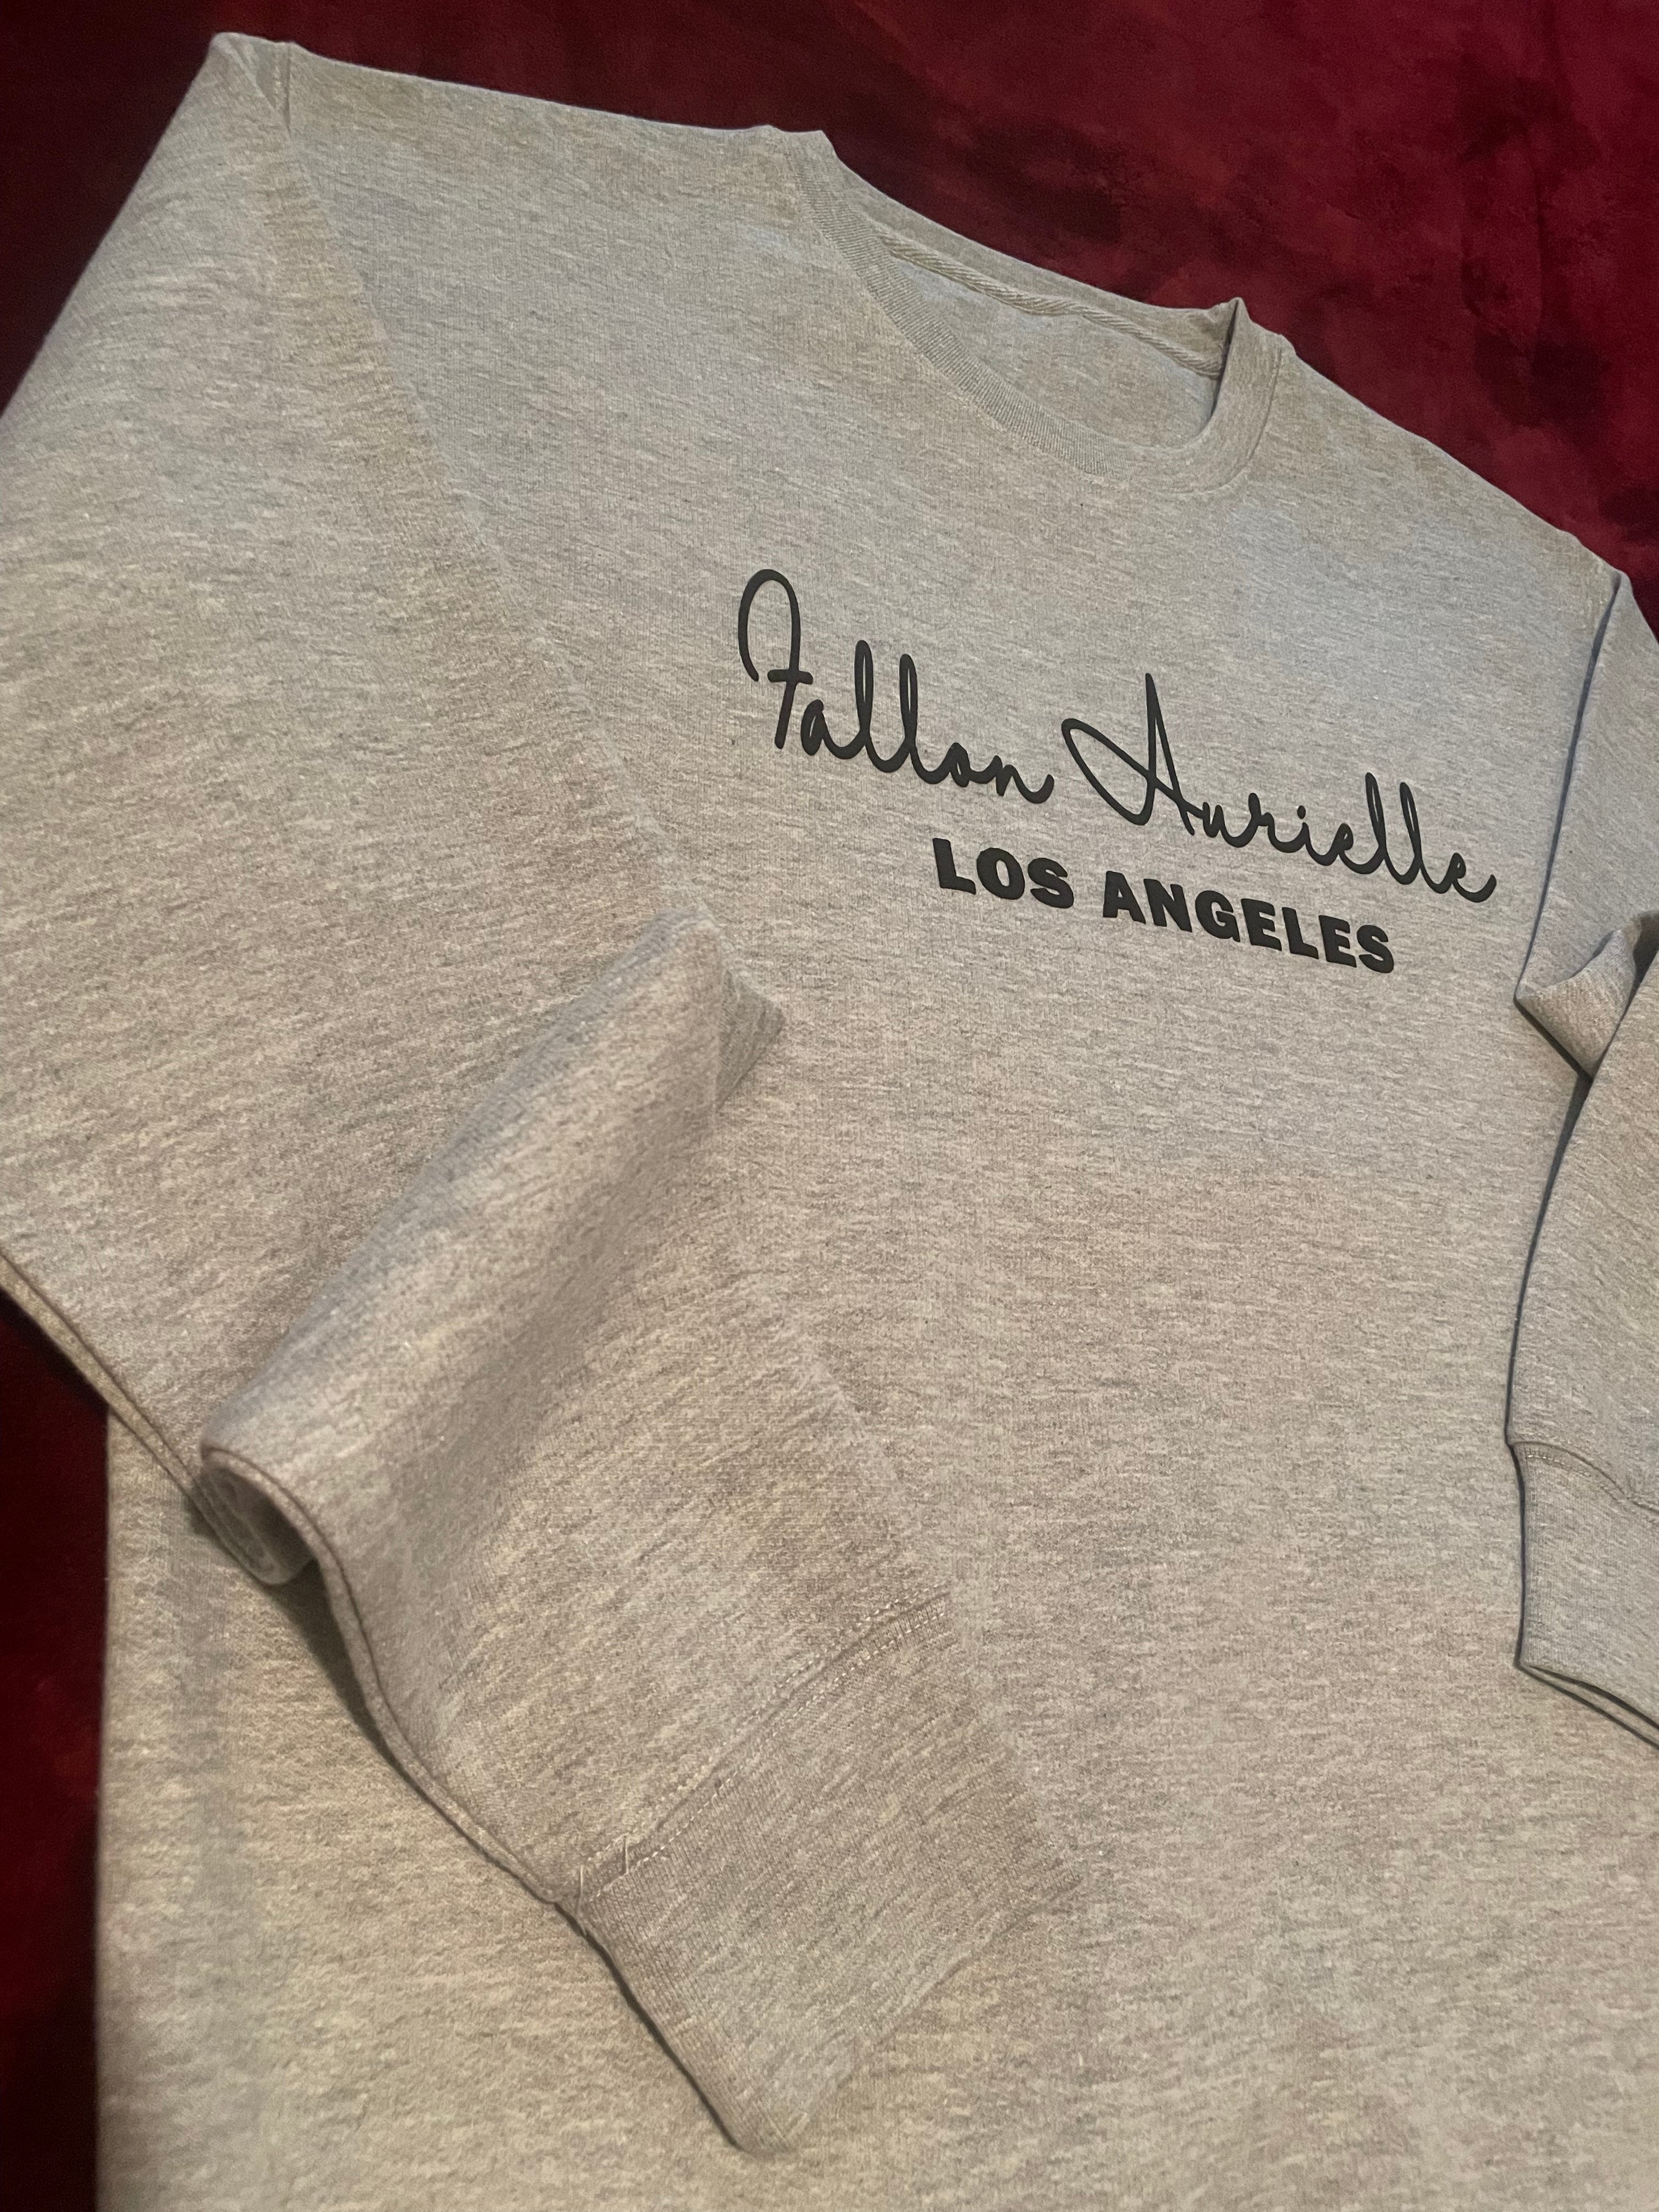 Fallon Aurielle Unisex Signature Los Angeles Crewneck Sweater (Gray & Black)